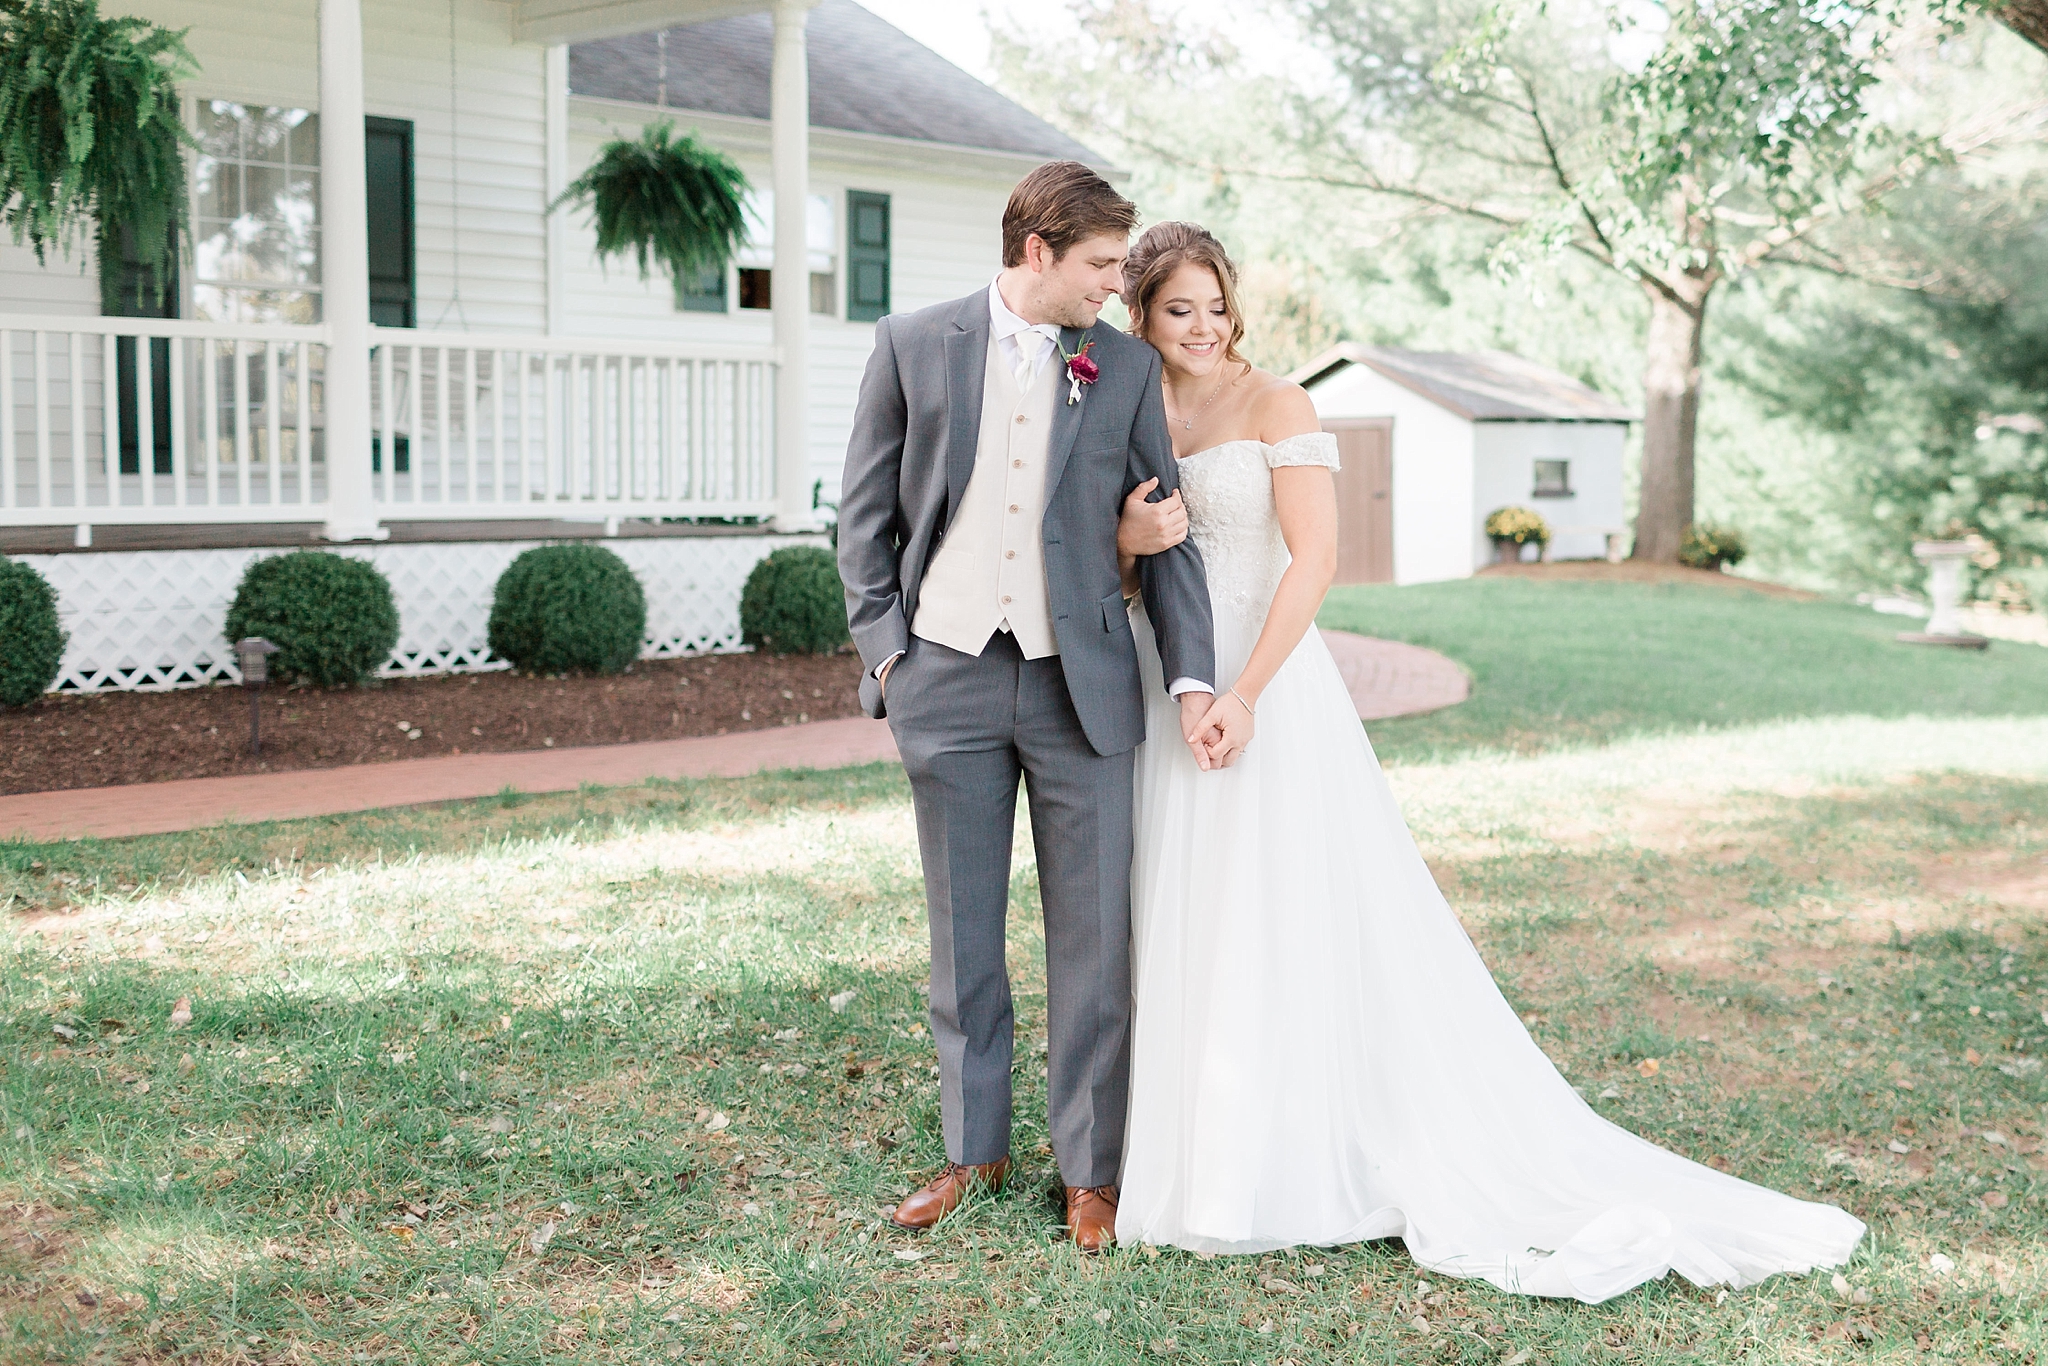 A beautiful country wedding in Fredericksburg, VA at Rock Hill Plantation House.